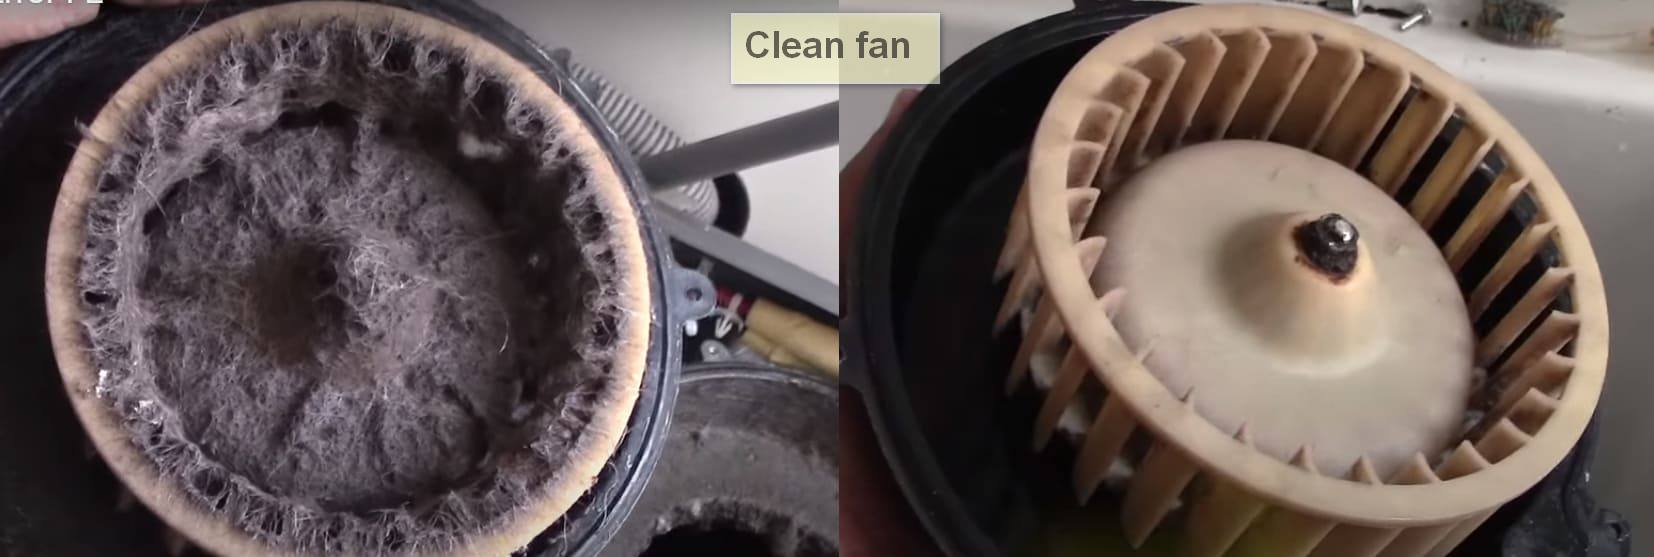 Samsung Washing and Drying Machines Error Code FE clean fan